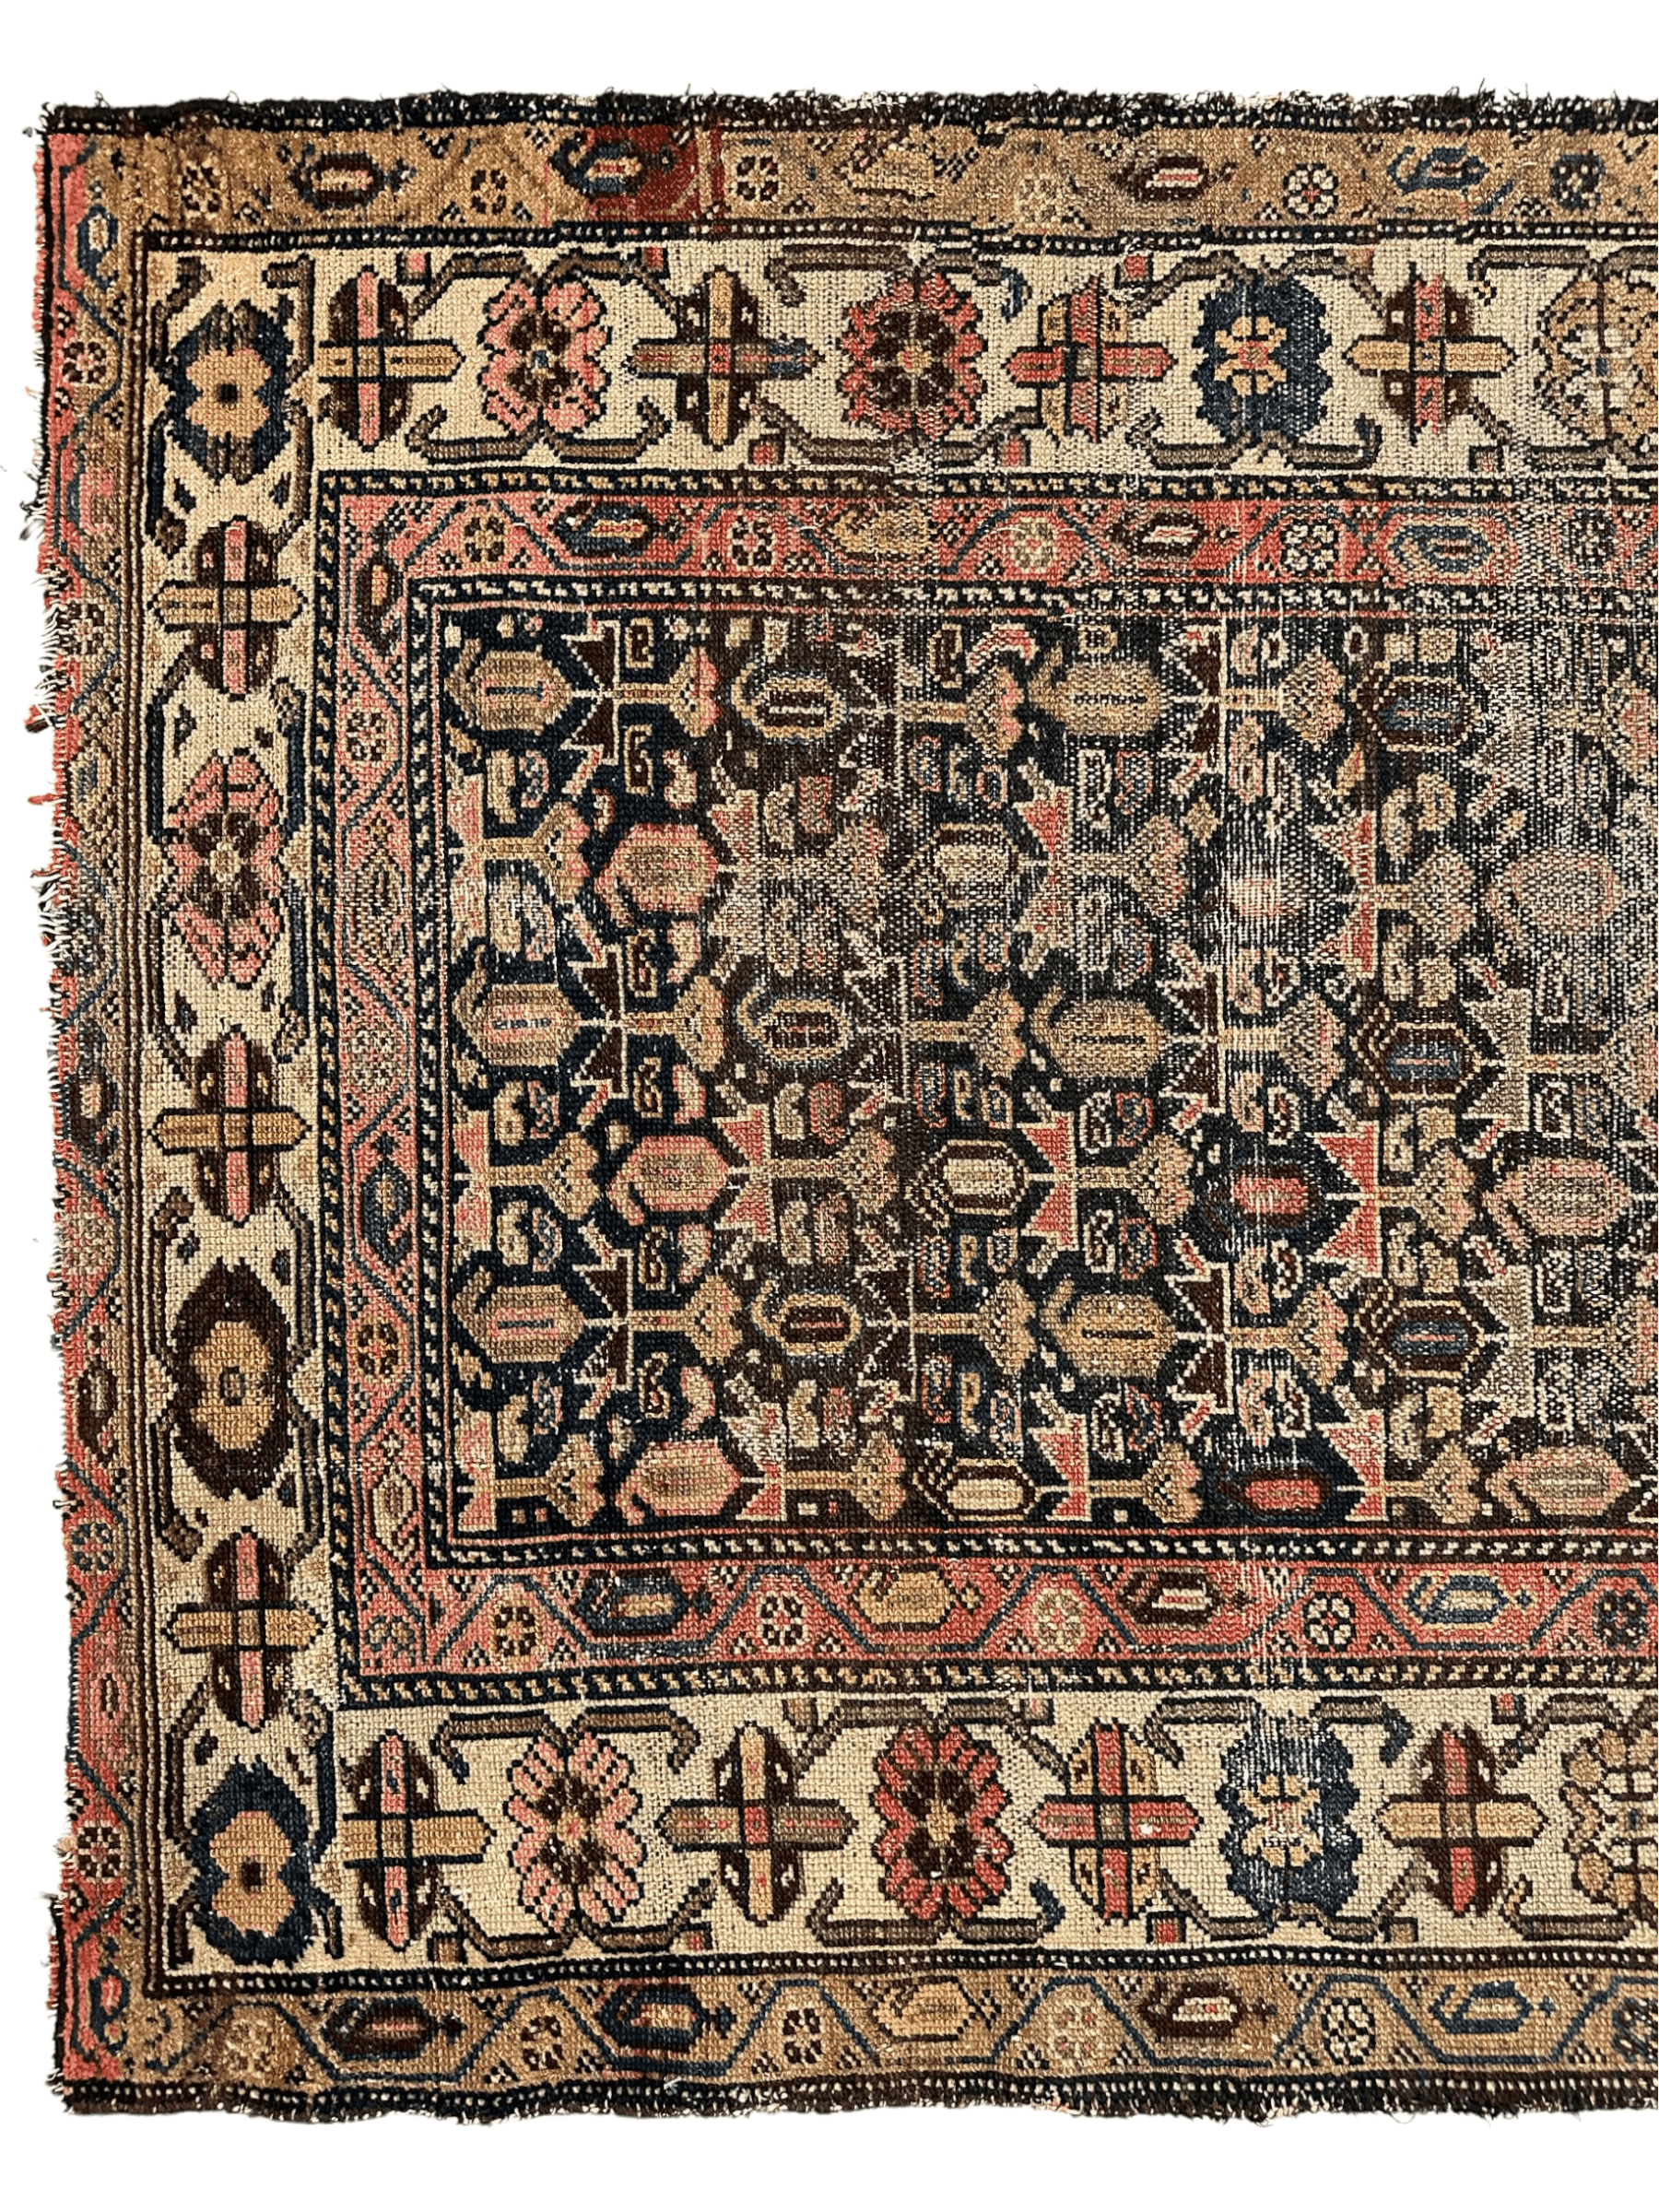 Antique Worn Late 19th Century Persian Rug 3’3” x 6’